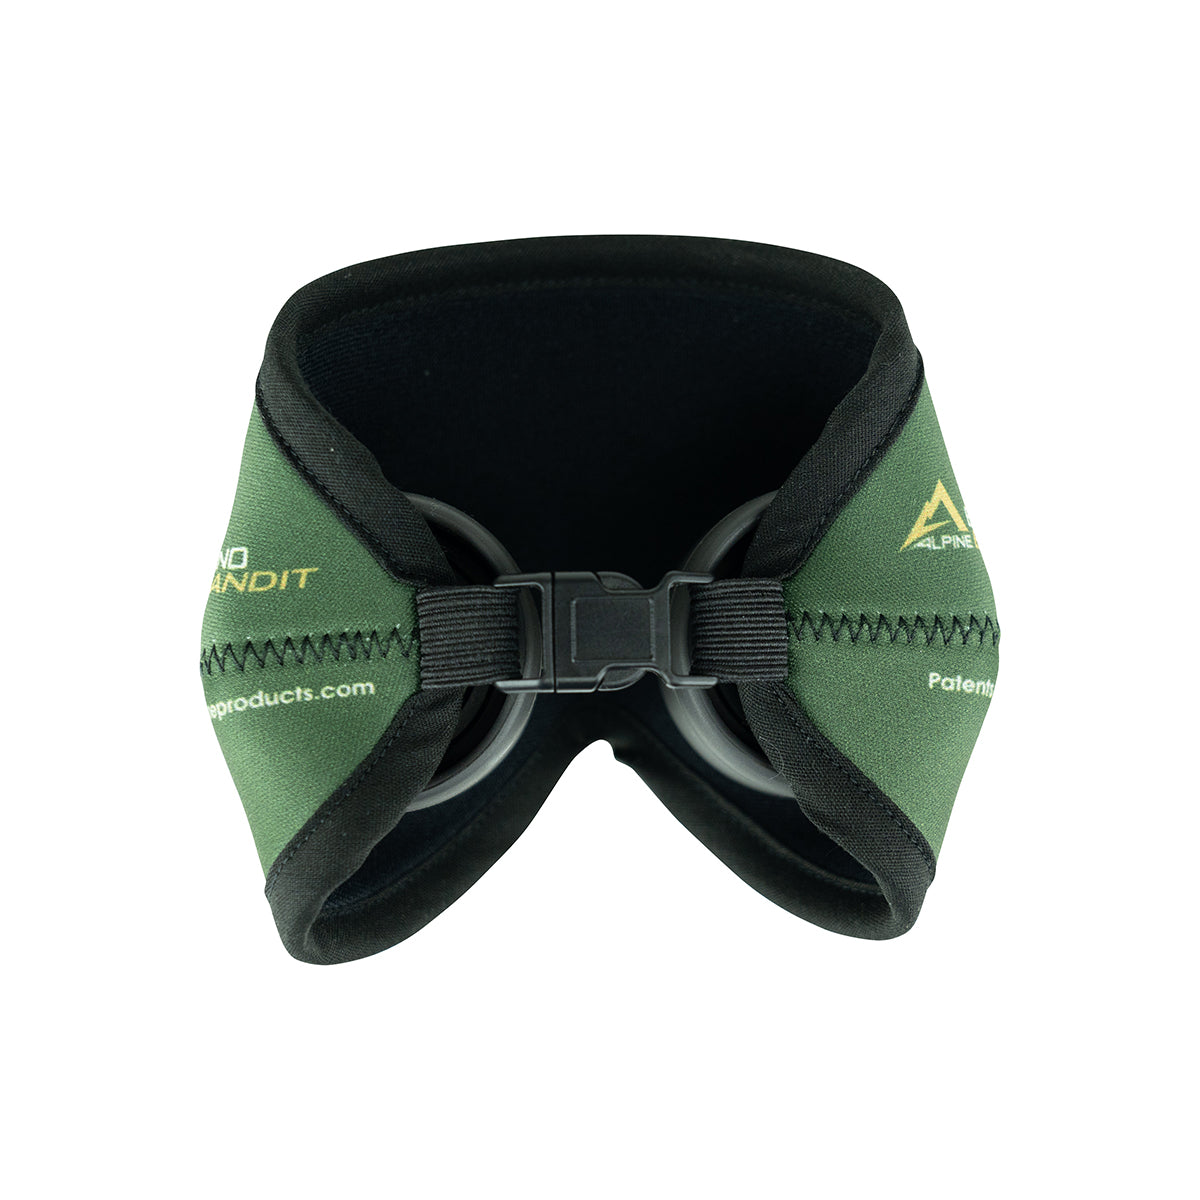 GOHUNT Bino Bandit Binocular Eyepiece Shield in goHUNT Bino Bandit Binocular Eyepiece Shield - goHUNT Shop by GOHUNT | Alpine Innovations - GOHUNT Shop